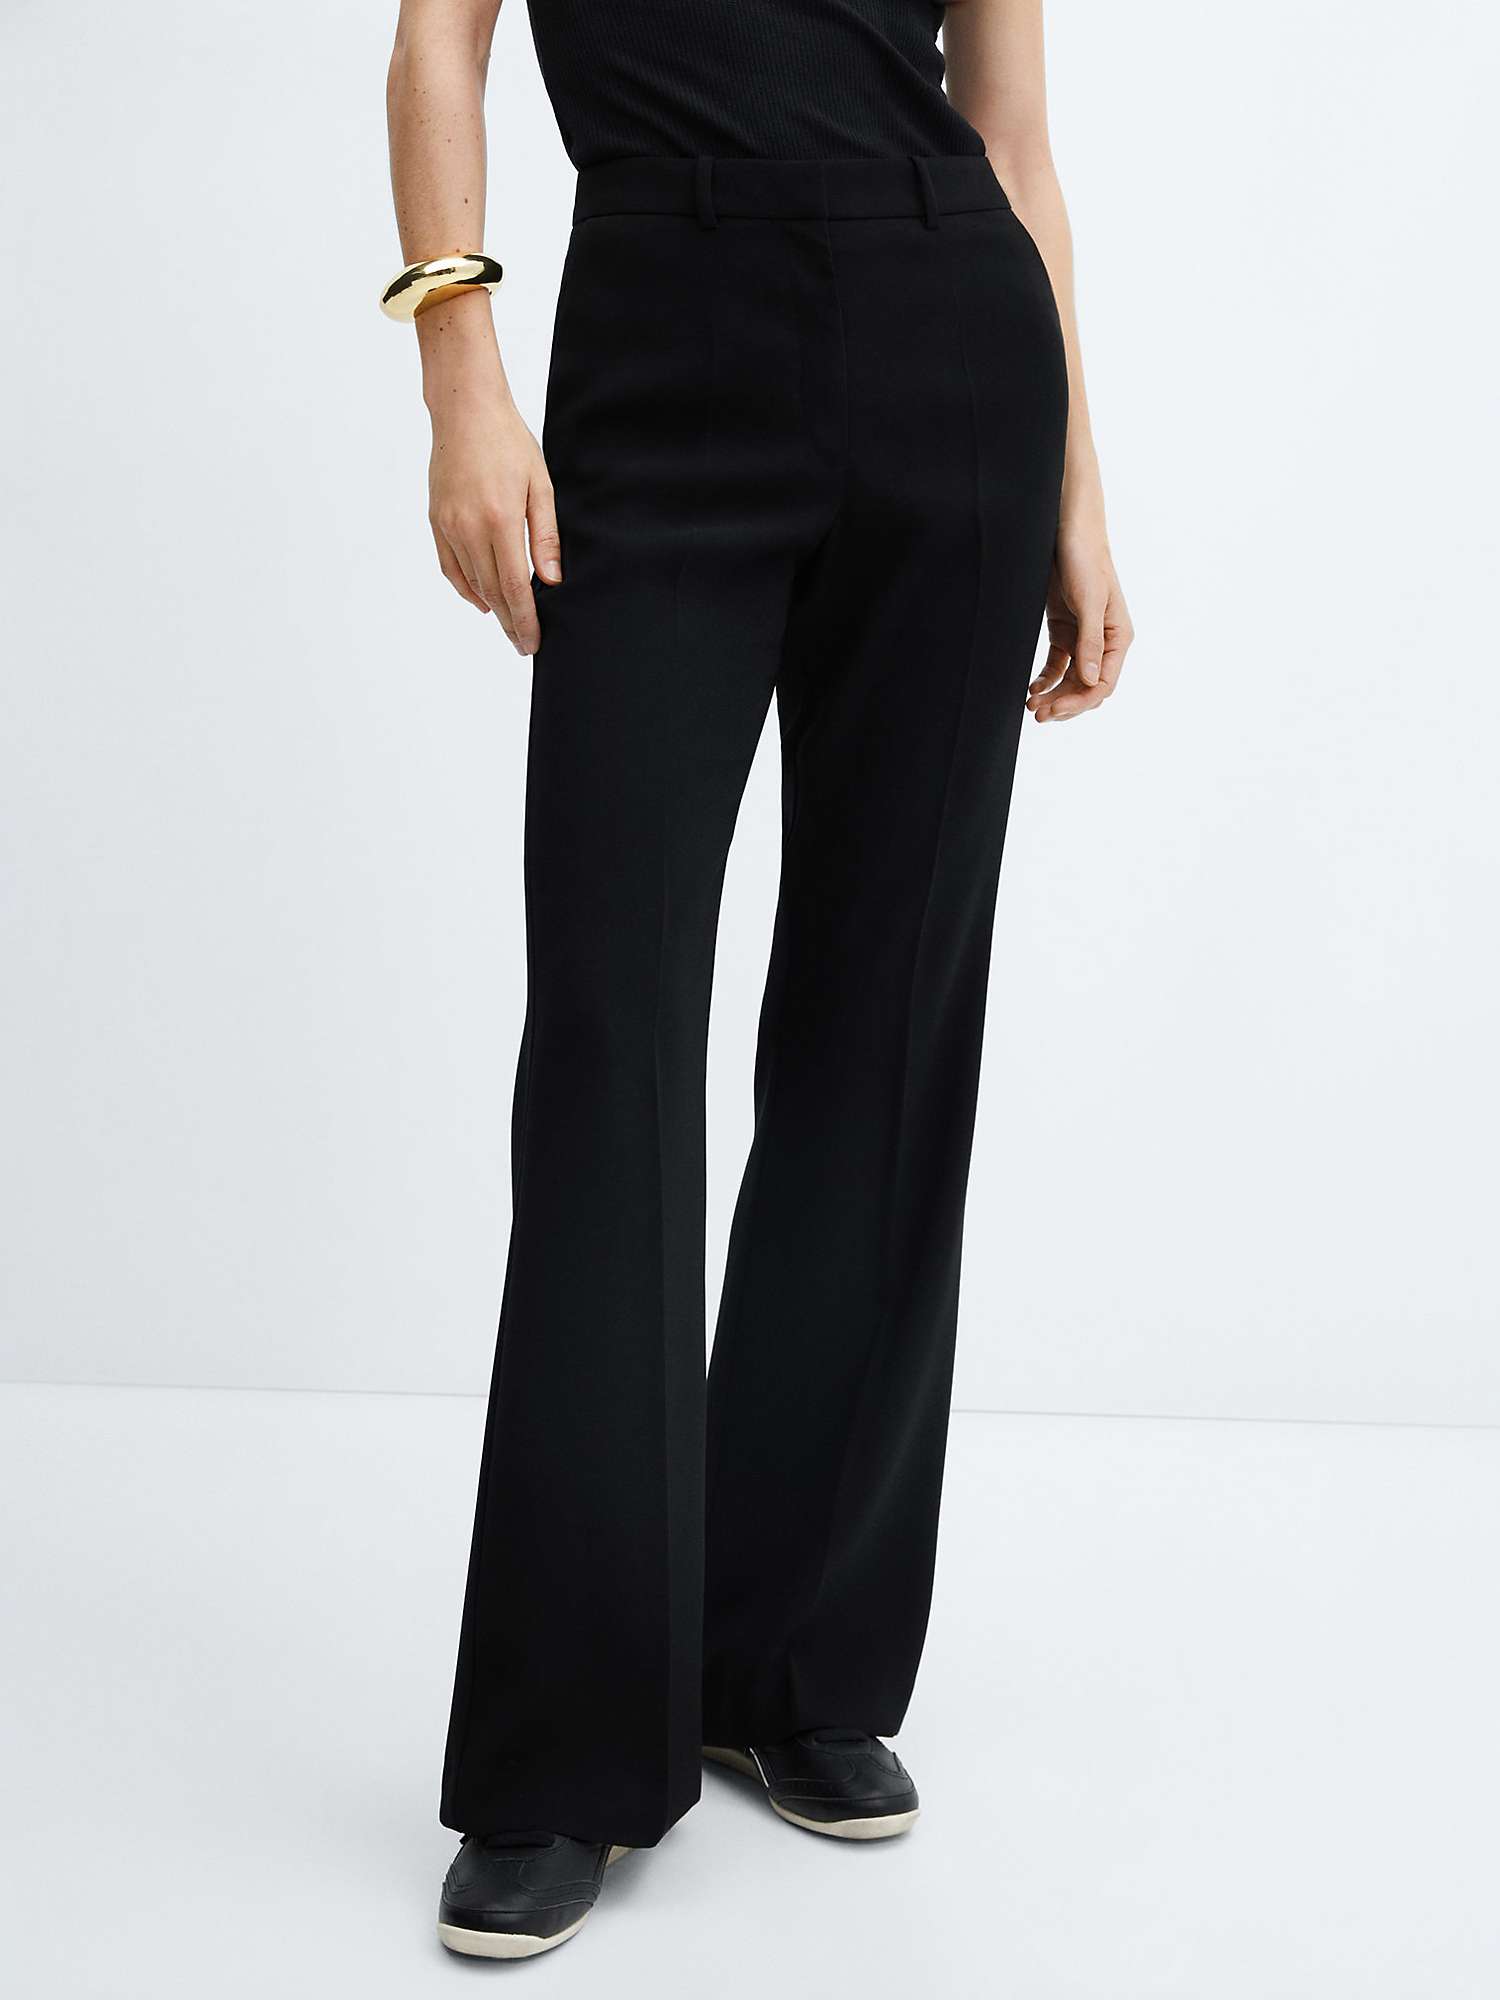 Buy Mango Tortuga Flared Suit Trousers, Black Online at johnlewis.com